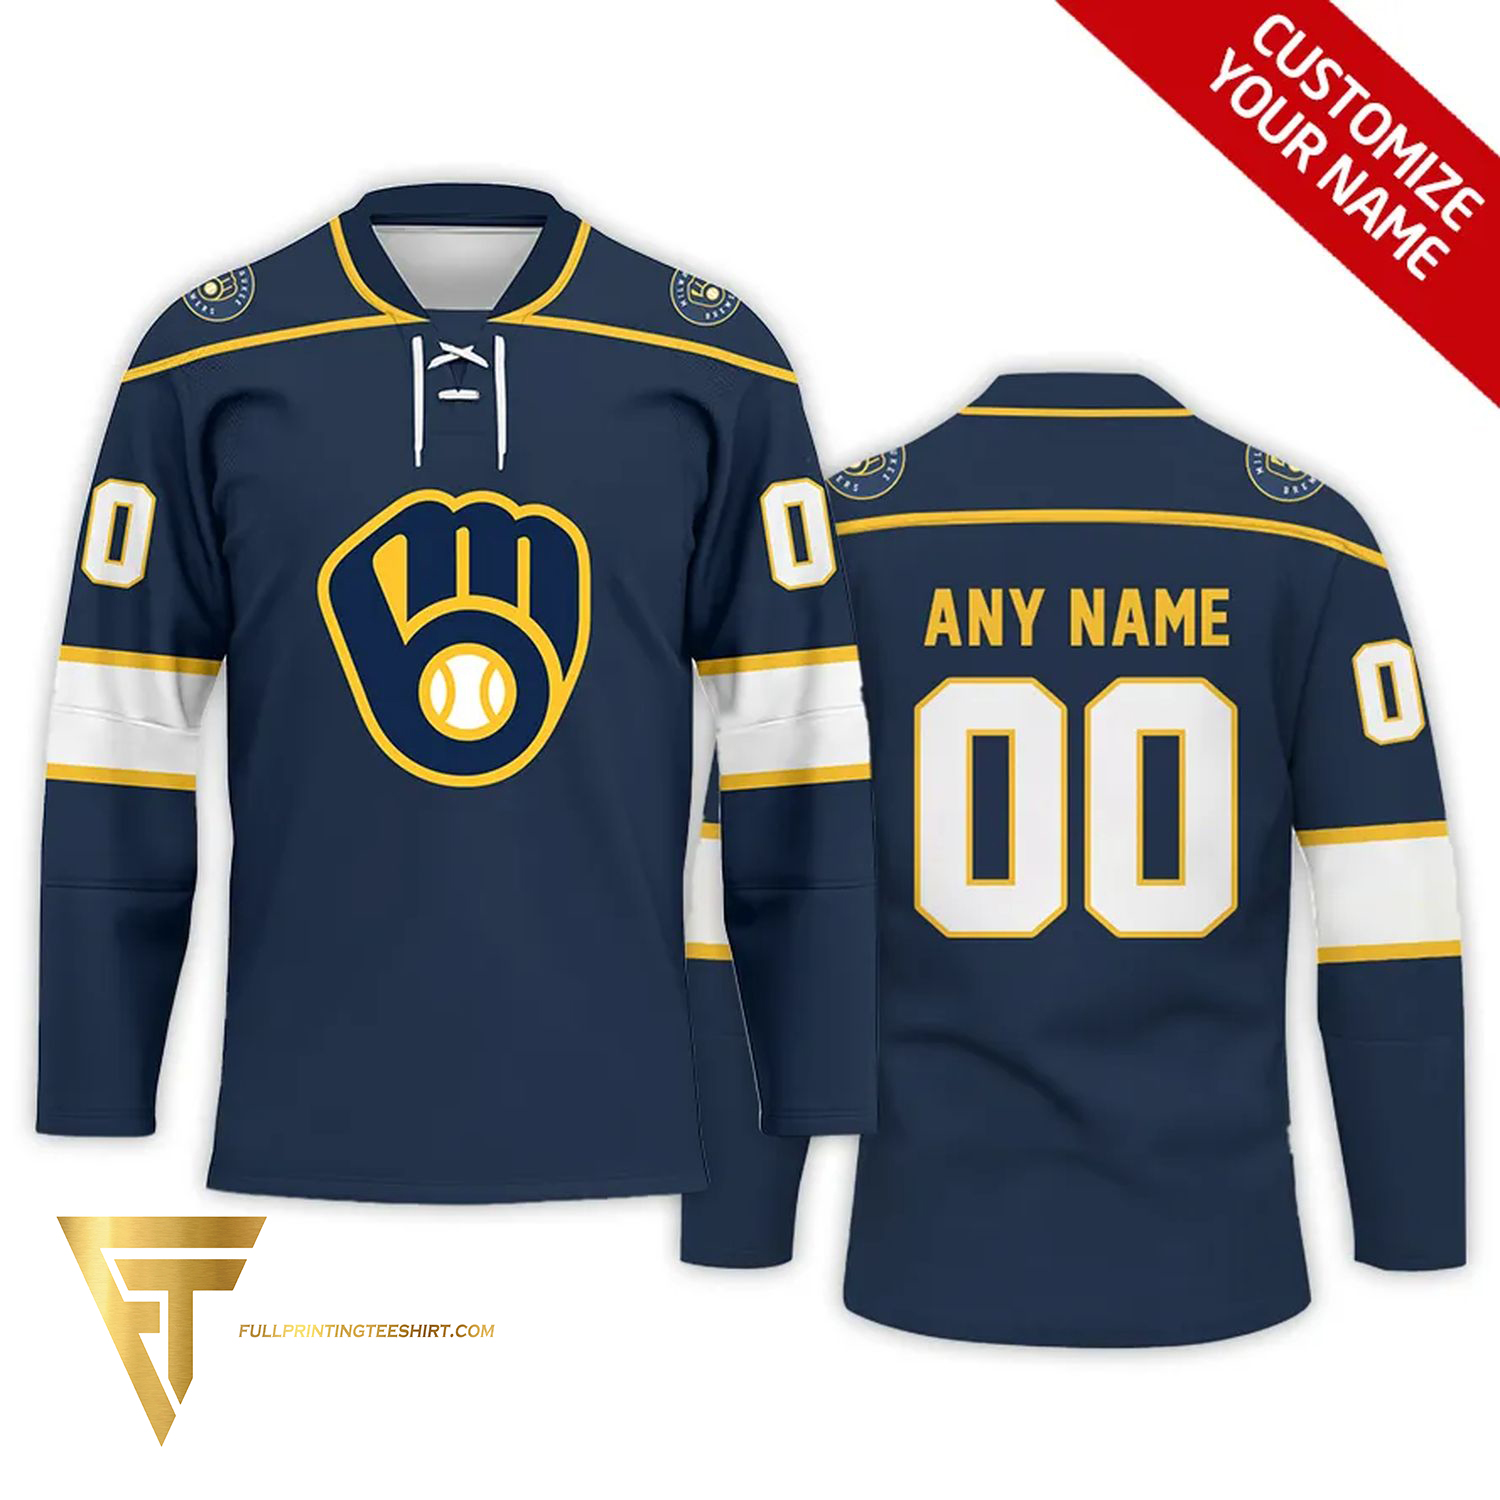 Top-selling item] Custom Miami Marlins Full Printing Hockey Jersey